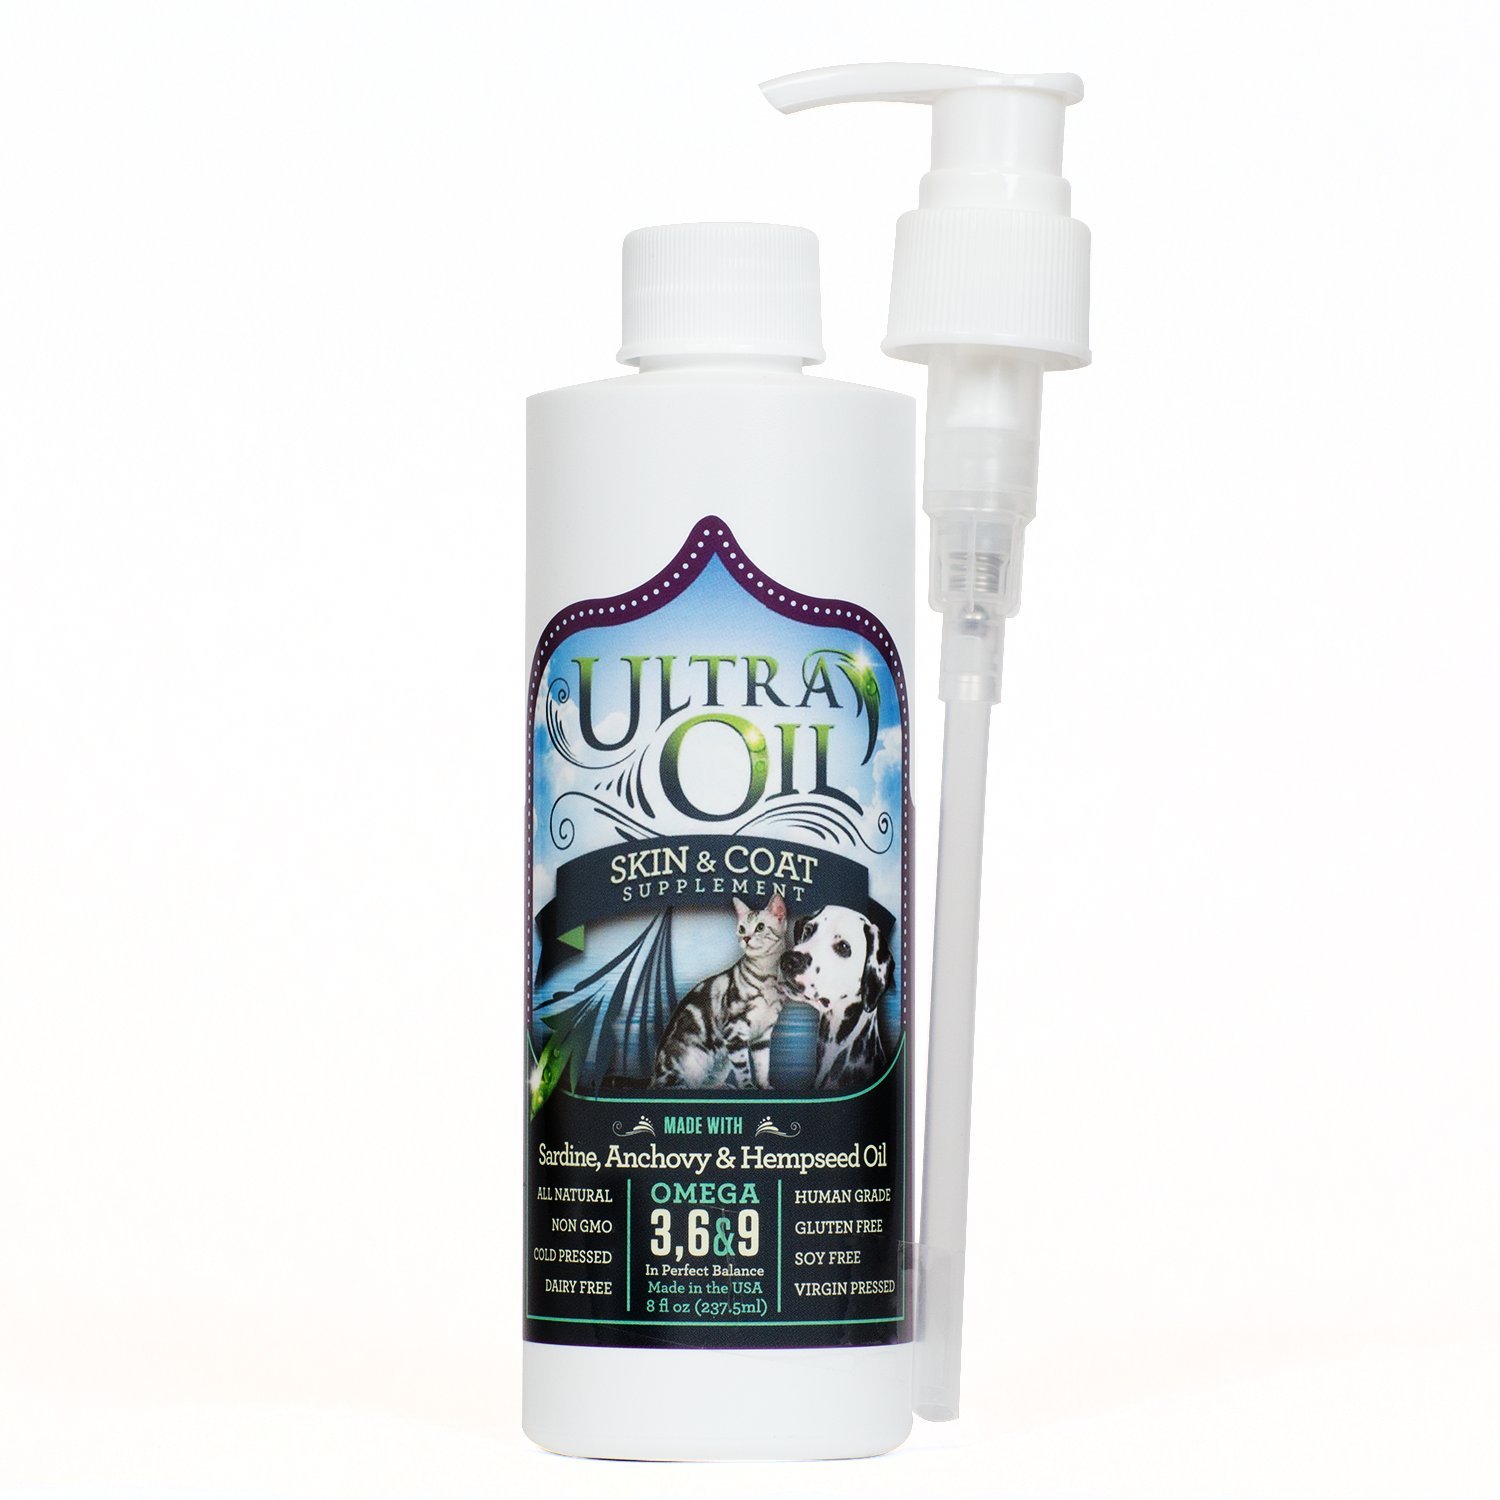  Ultra Oil Skin & Coat Supplement 犬と猫のためのウルトラオイル皮膚と被毛のサプリメント - ヘンプシードオイル、亜麻仁油、グレープシードオイル、魚油...